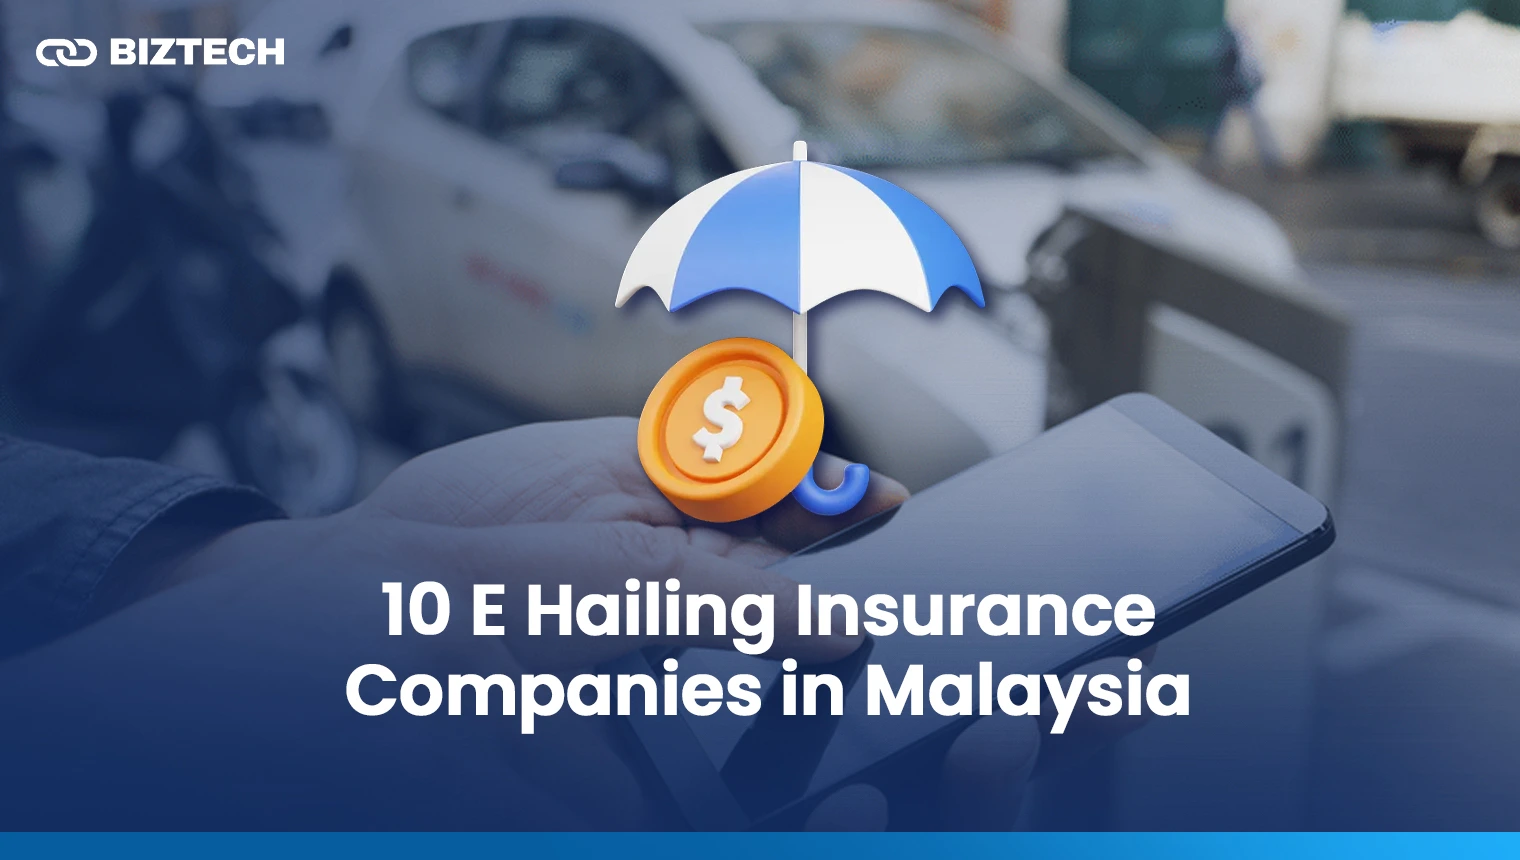 10 E Hailing Insurance Companies in Malaysia